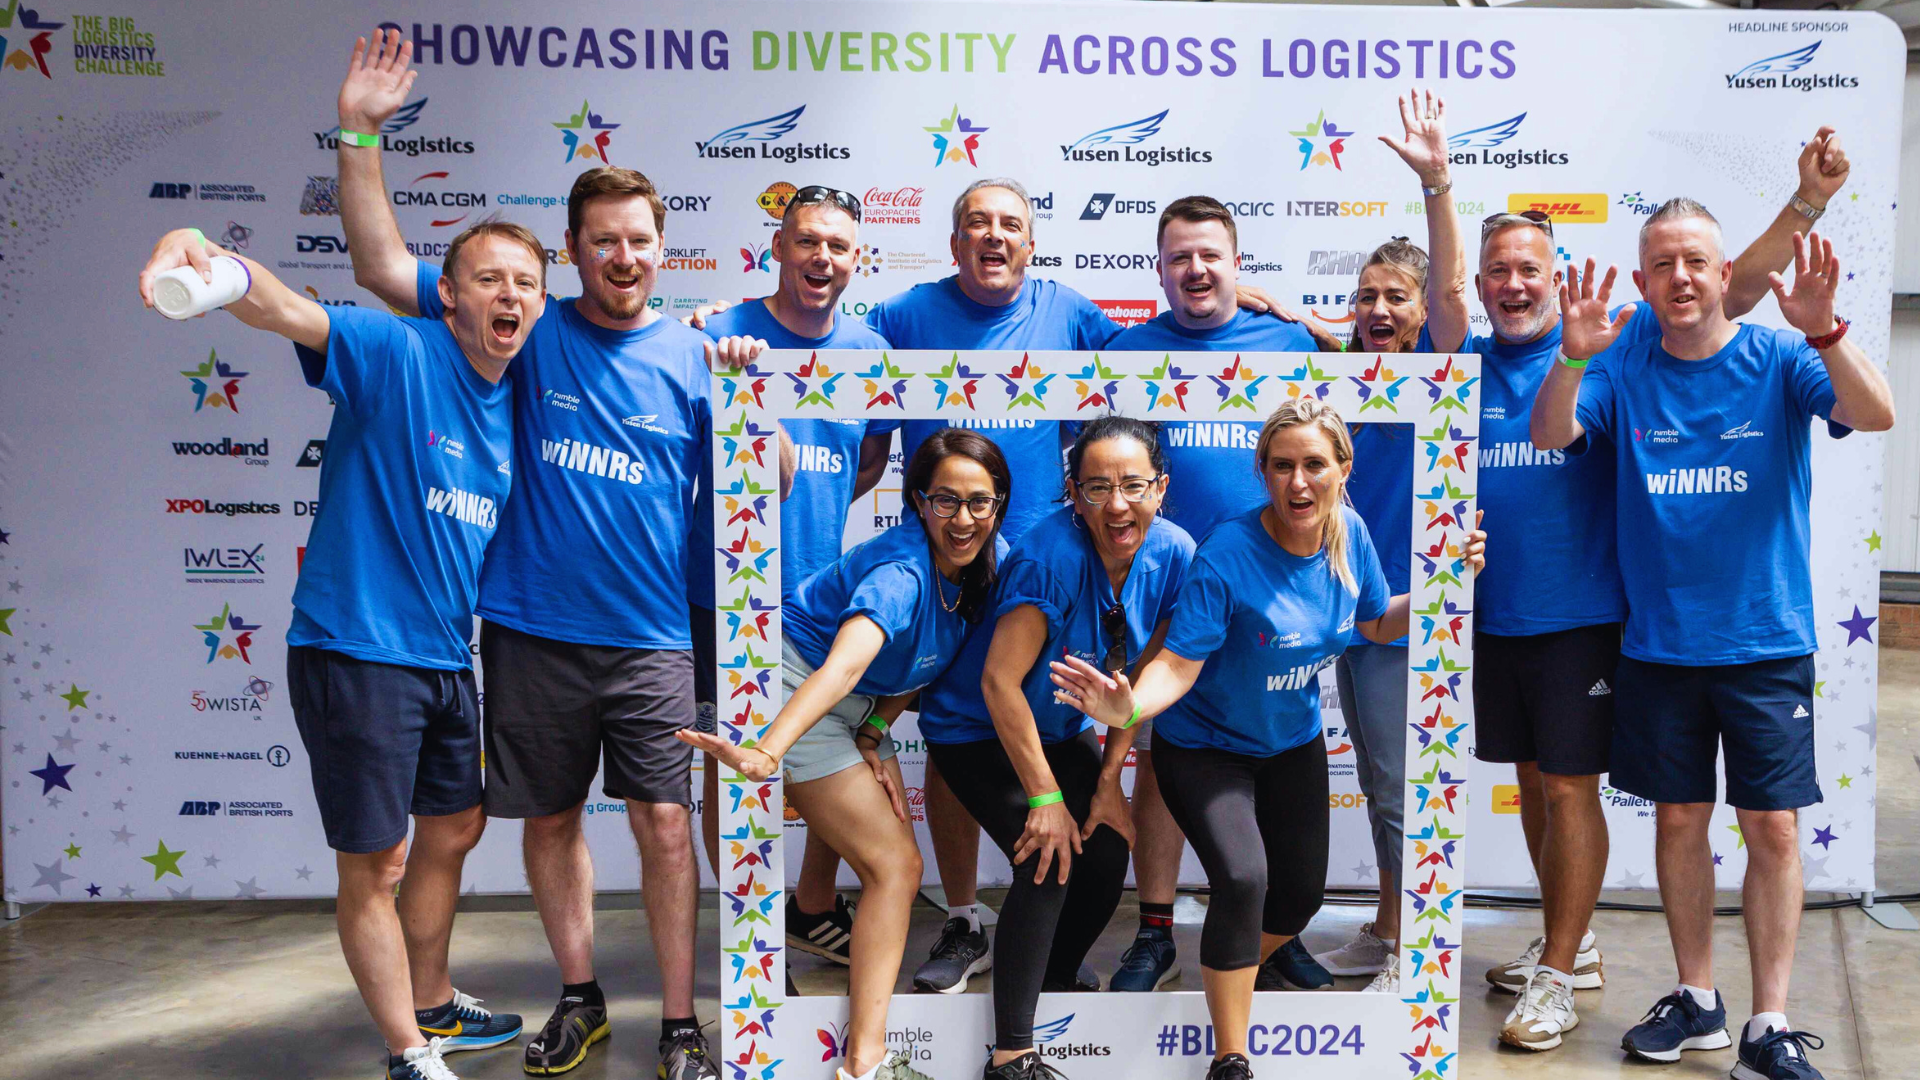 Highlighting Diversity and Teamwork: NNR UK’s success at The Big Logistics Diversity Challenge